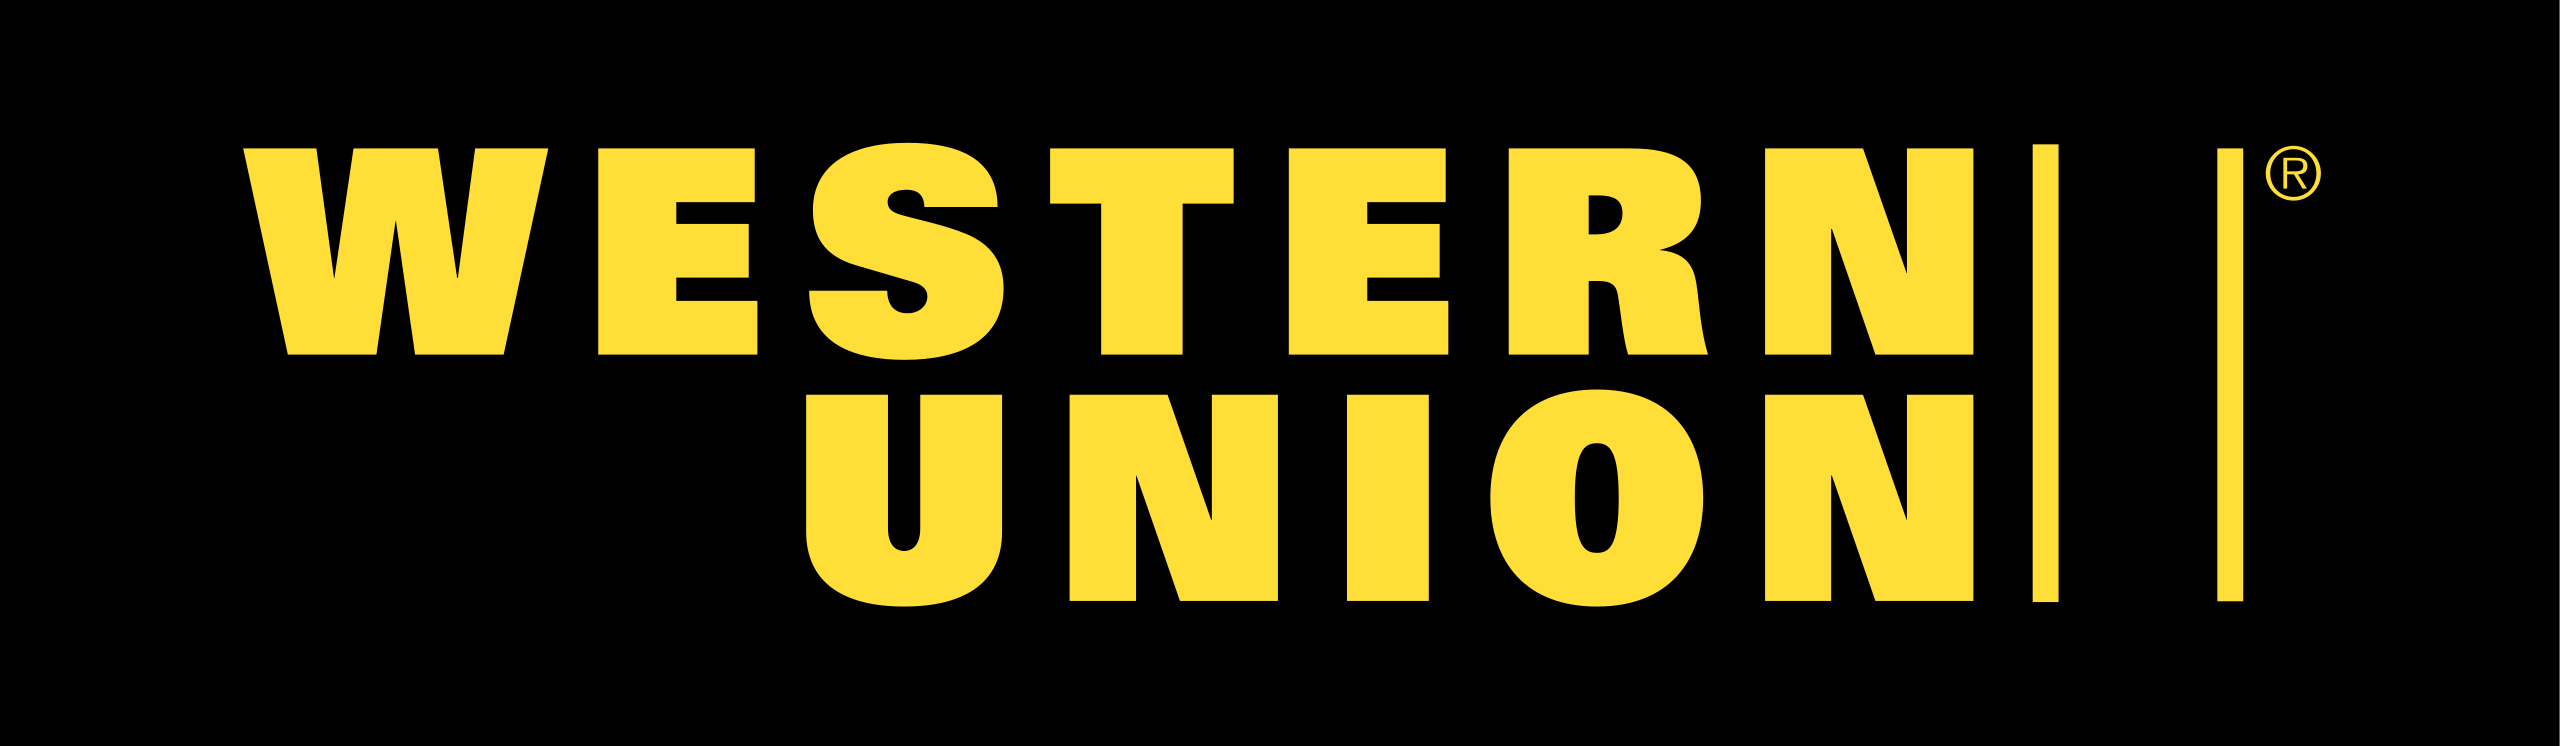 Western Union kontakt